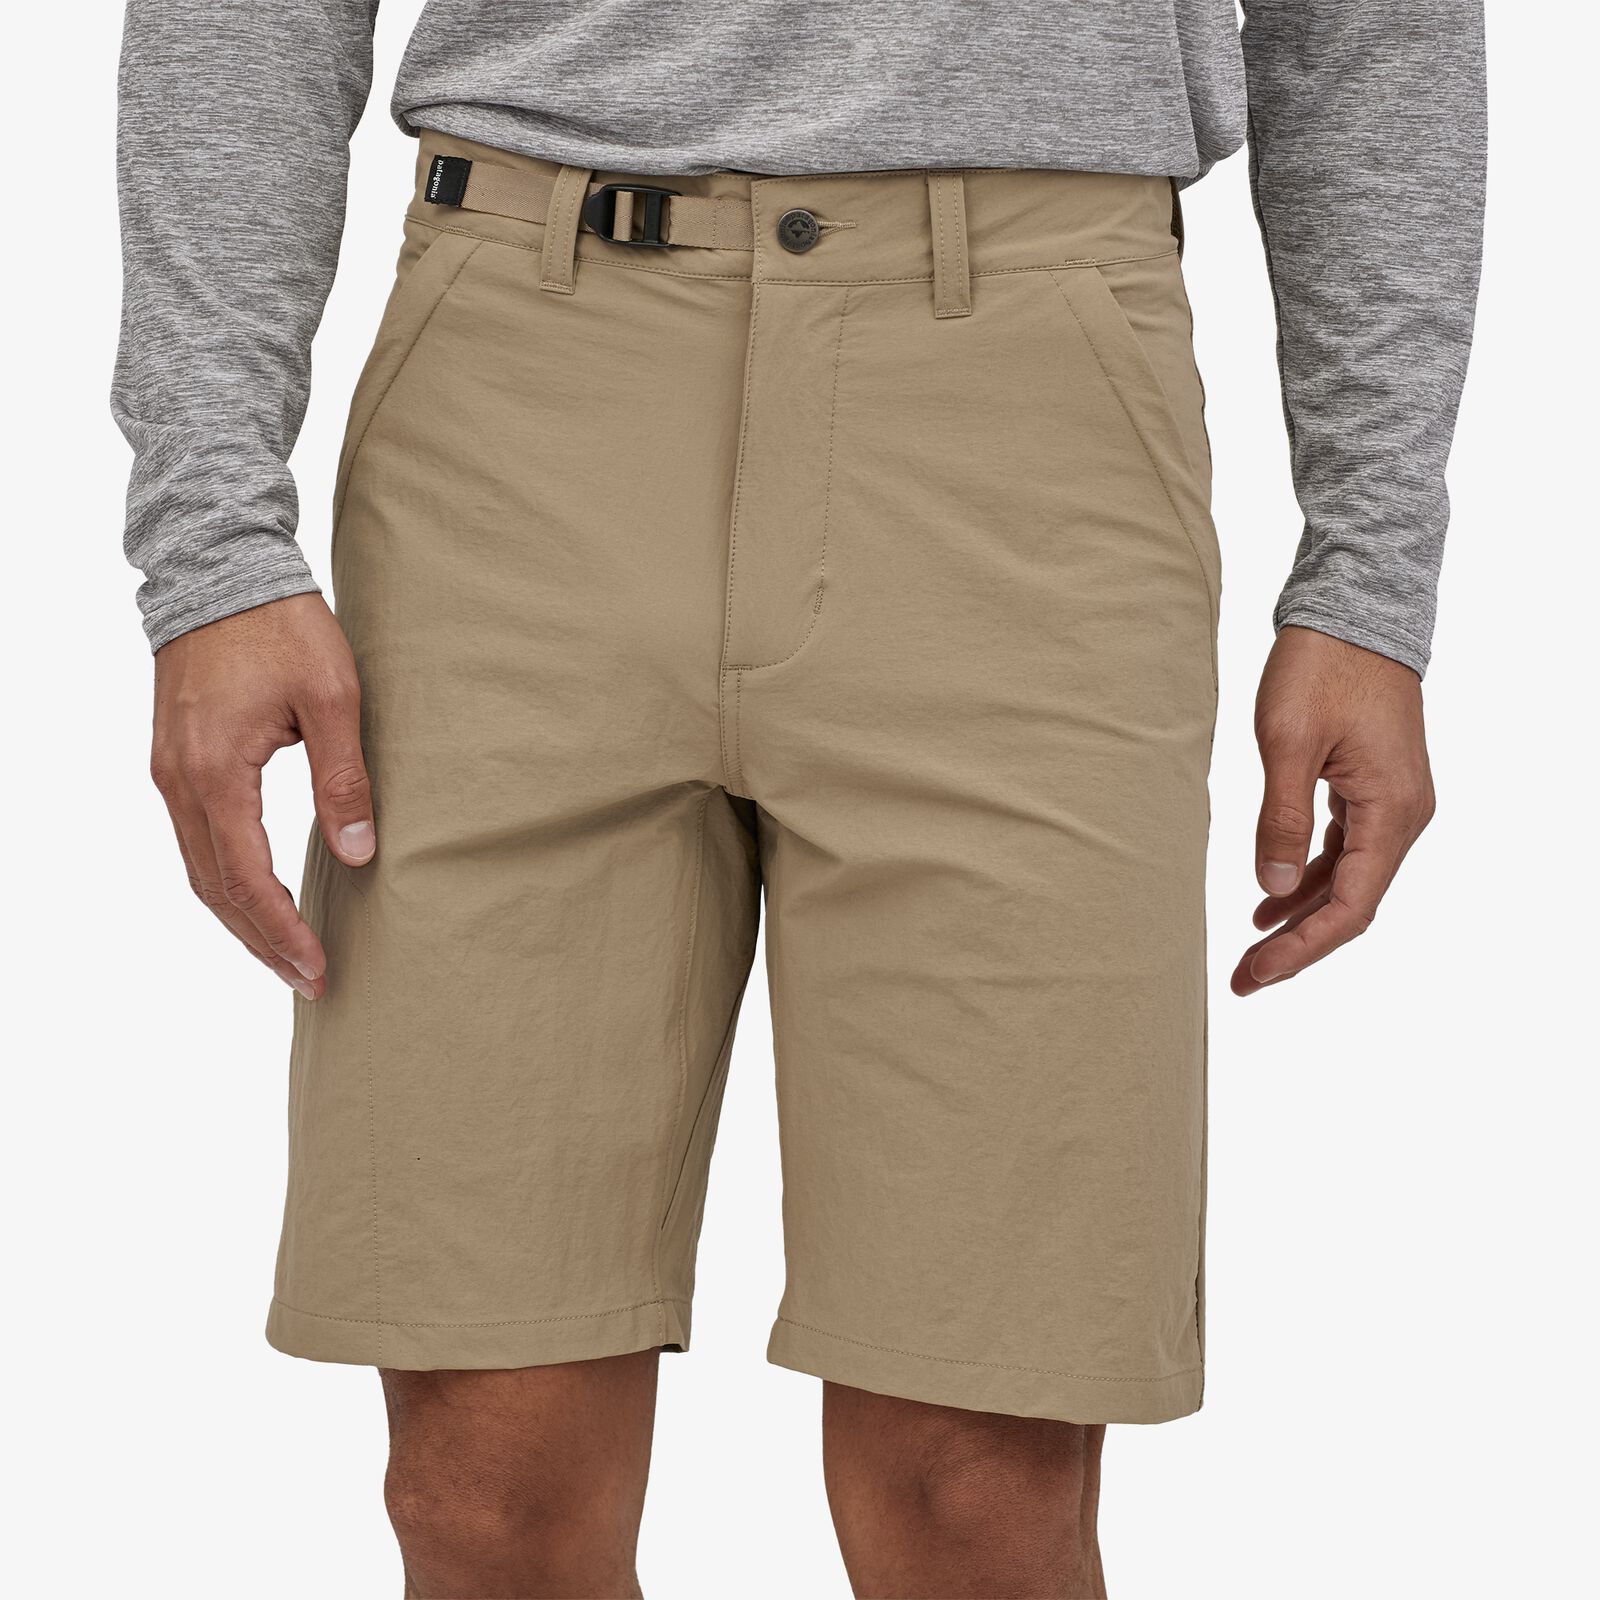 Patagonia Men's Stonycroft Shorts - 10